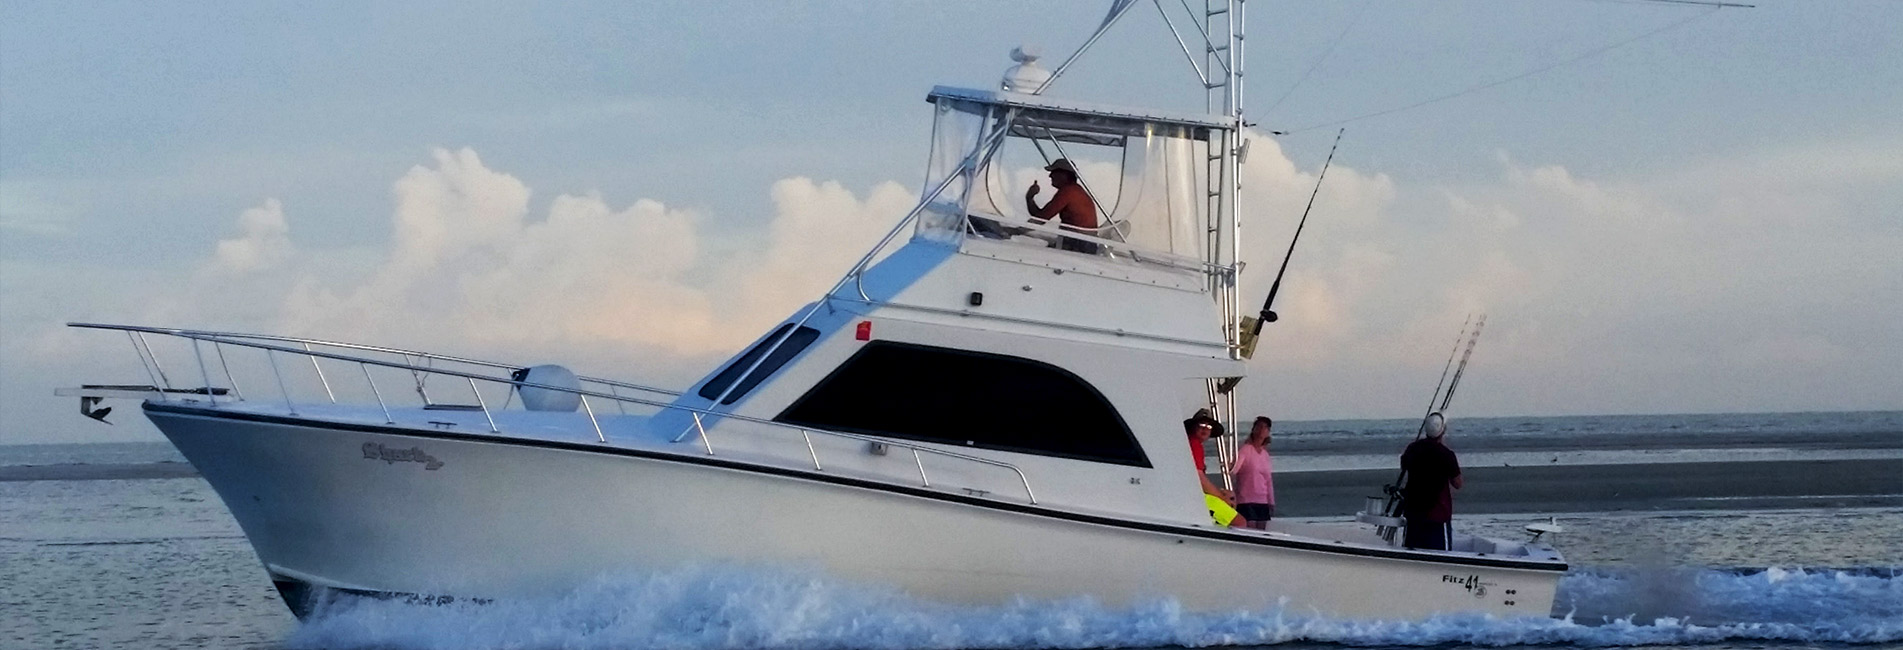 Charter Boat Shark - Fishing Charter for Hire Sarasota, FL